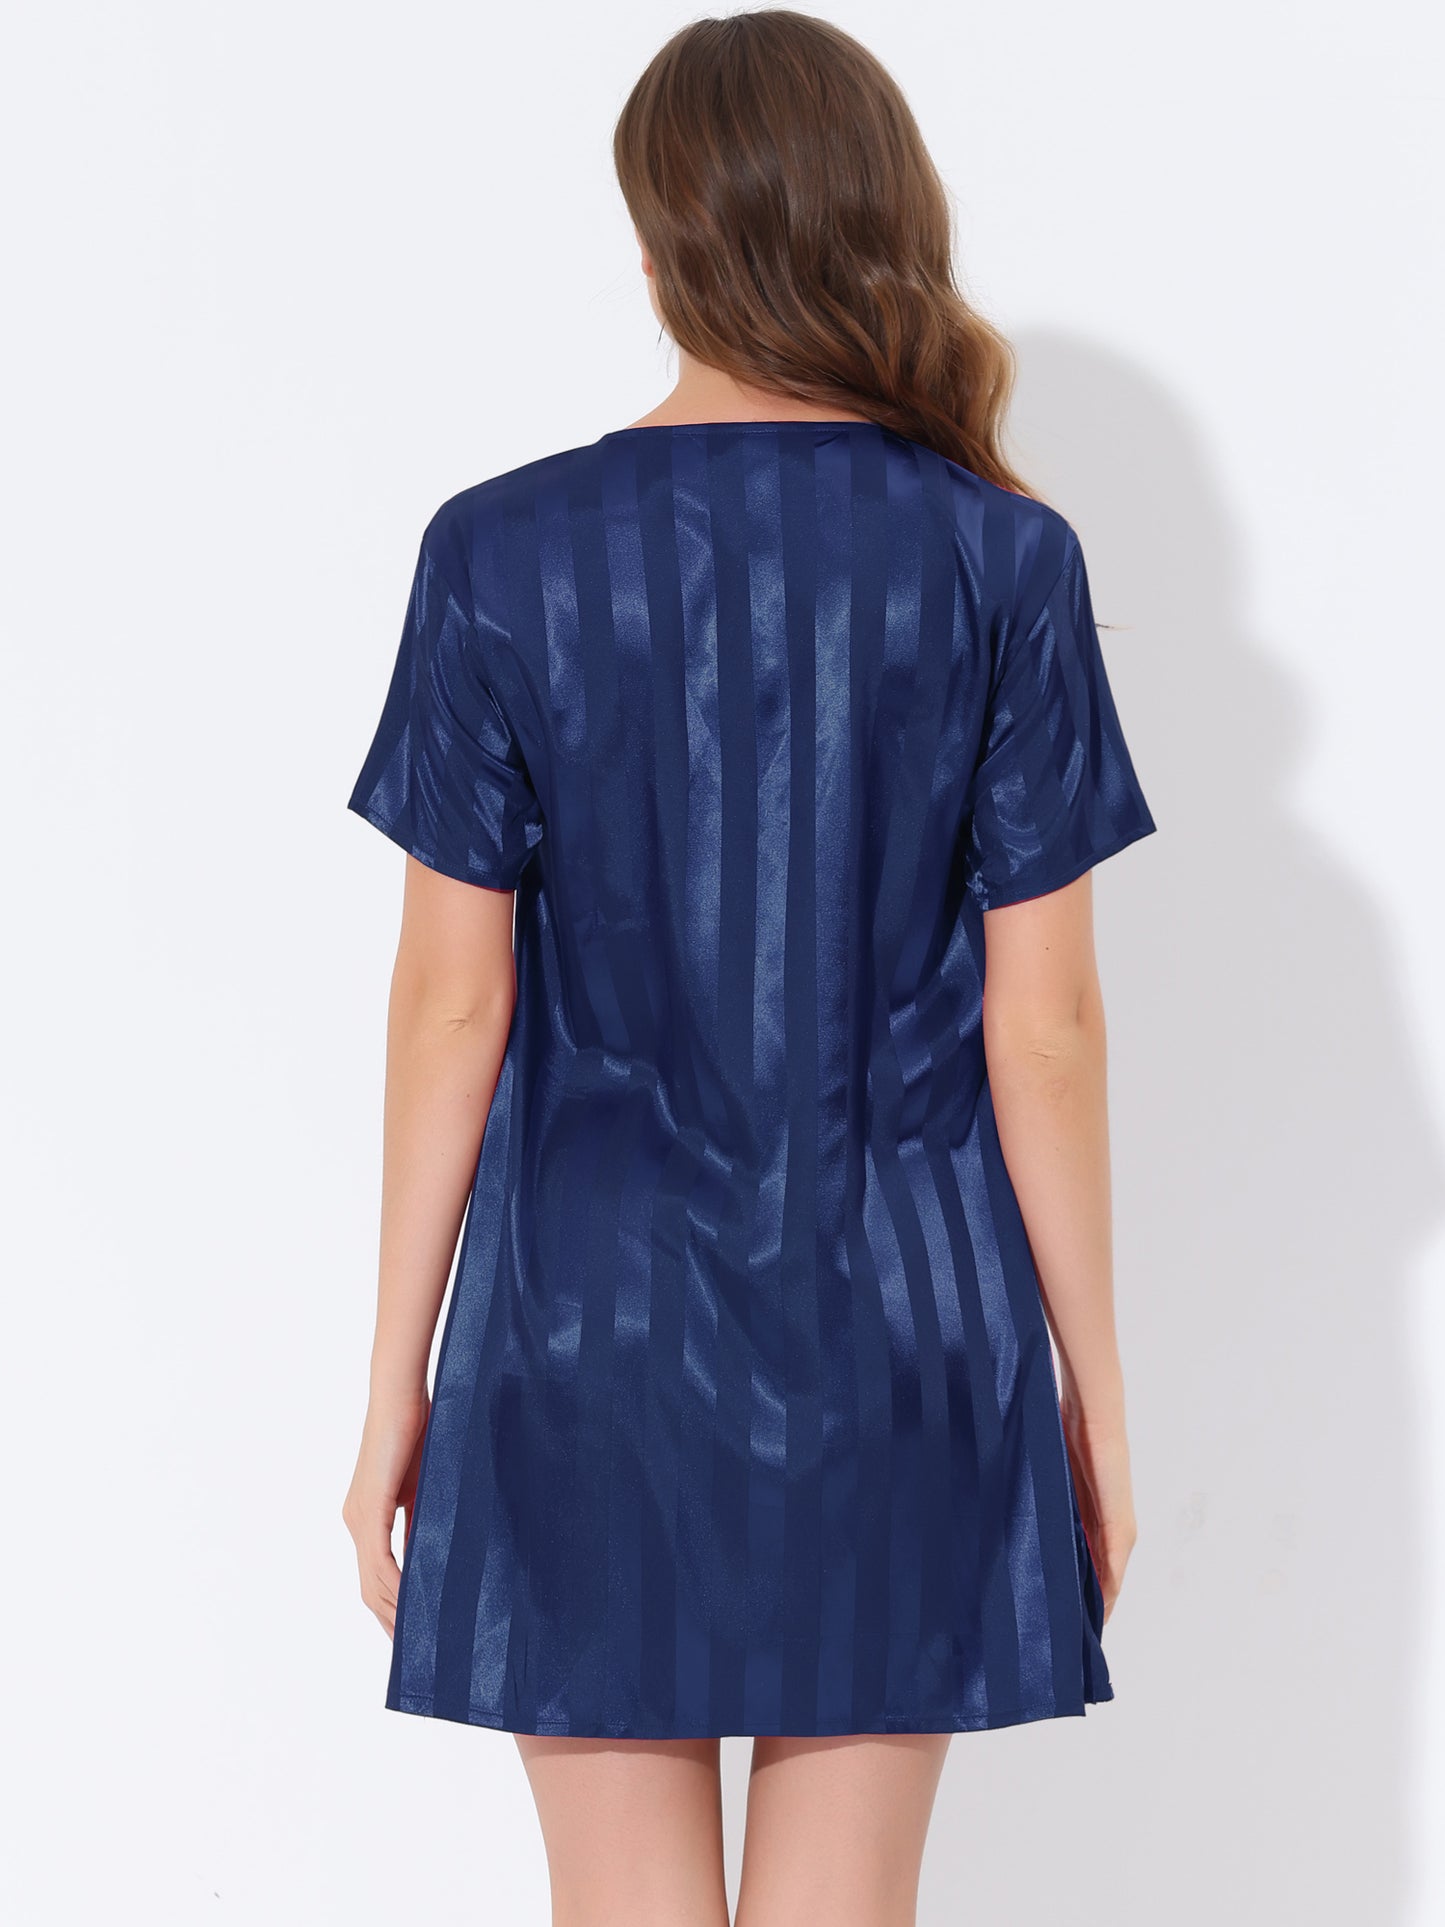 cheibear Pajamas Satin Dress Nightshirt Short Sleeves Lounge Sleepwear Nightgown Blue